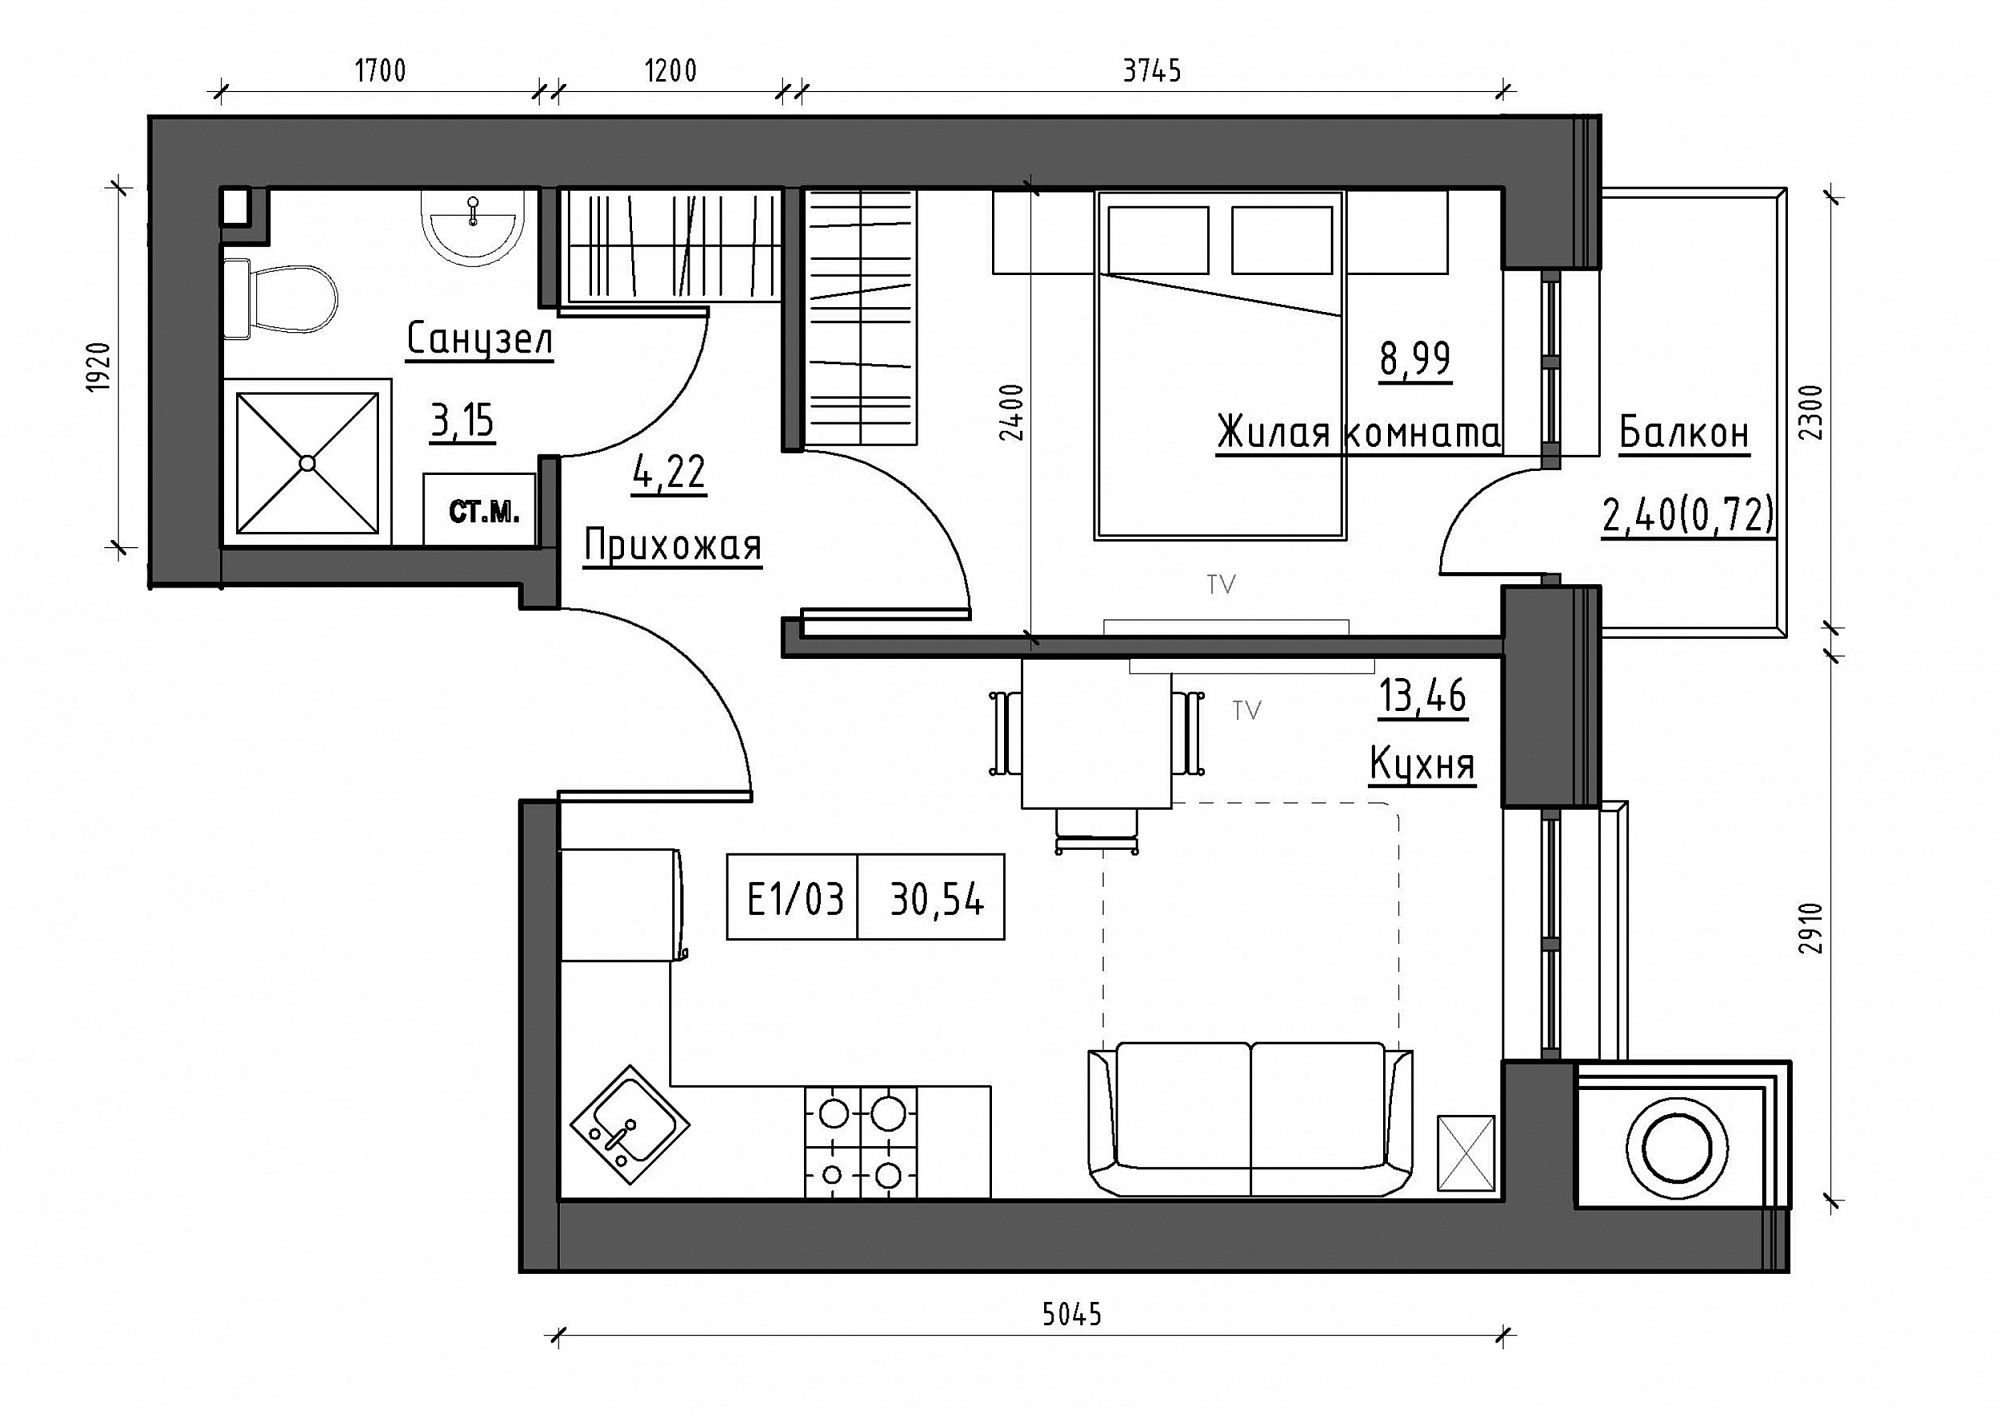 Planning 1-rm flats area 30.58m2, KS-012-02/0013.